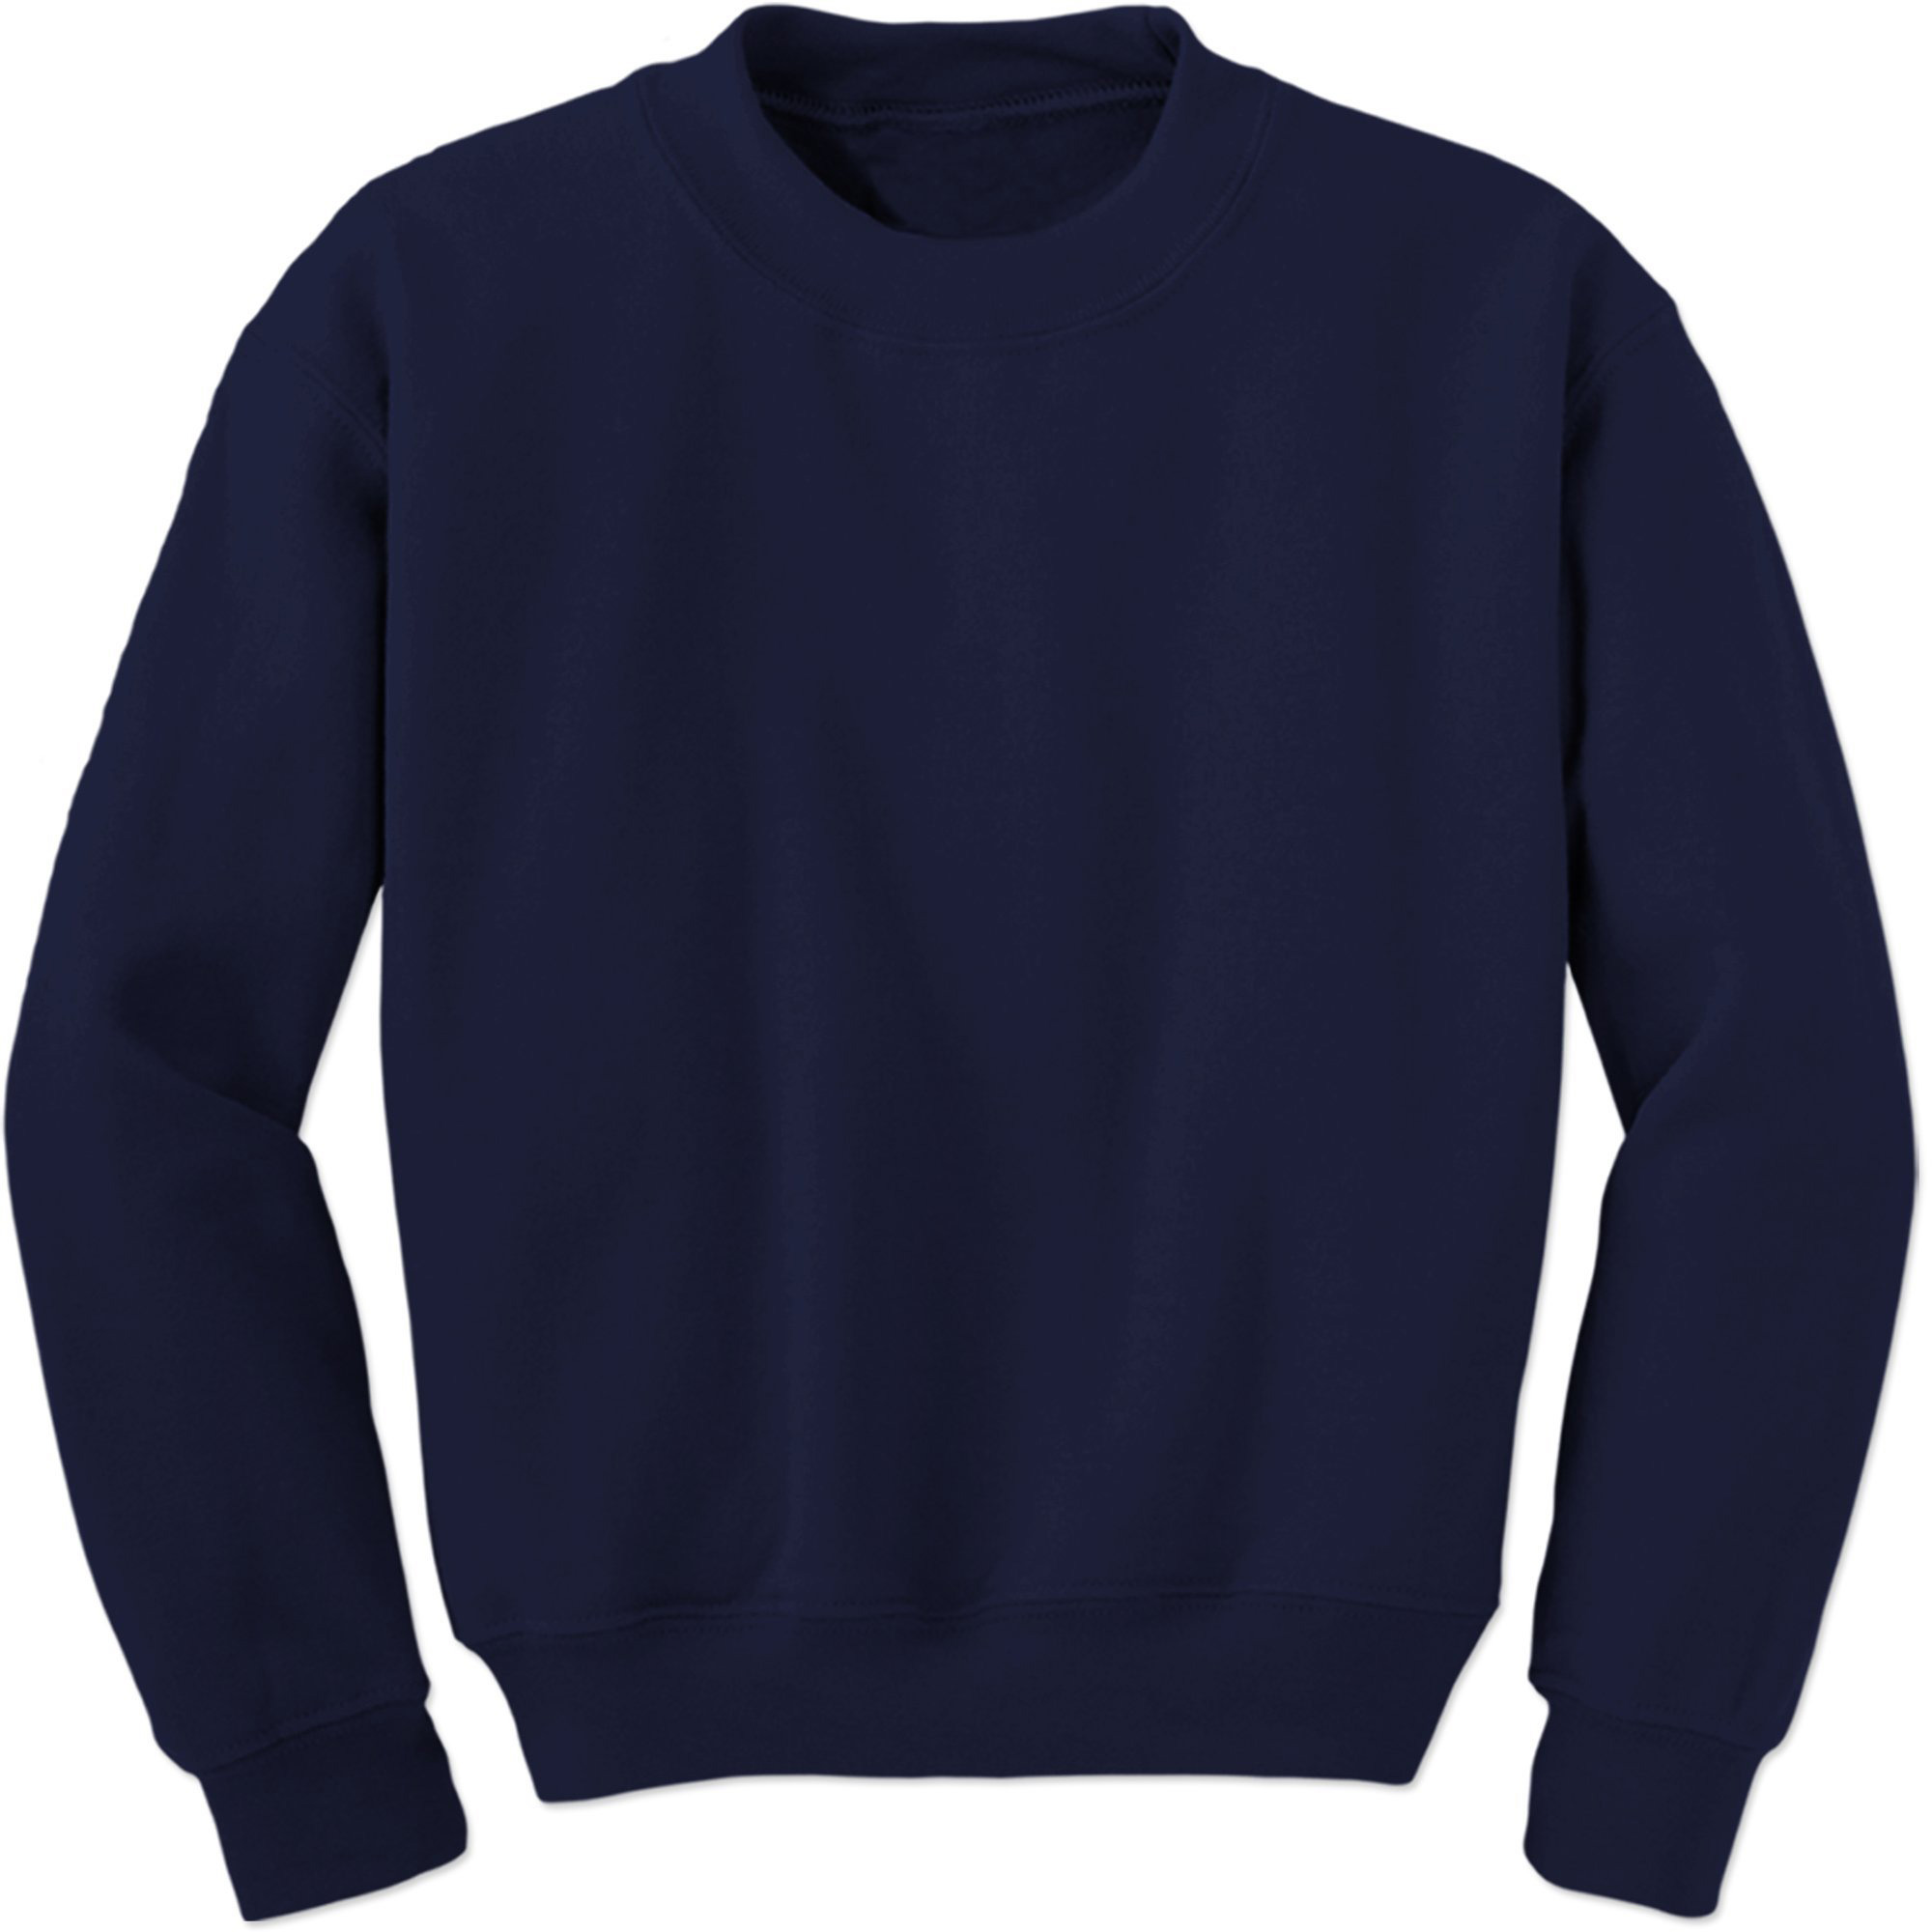 Blank Navy Blue Sweatshirt - Superteeshops